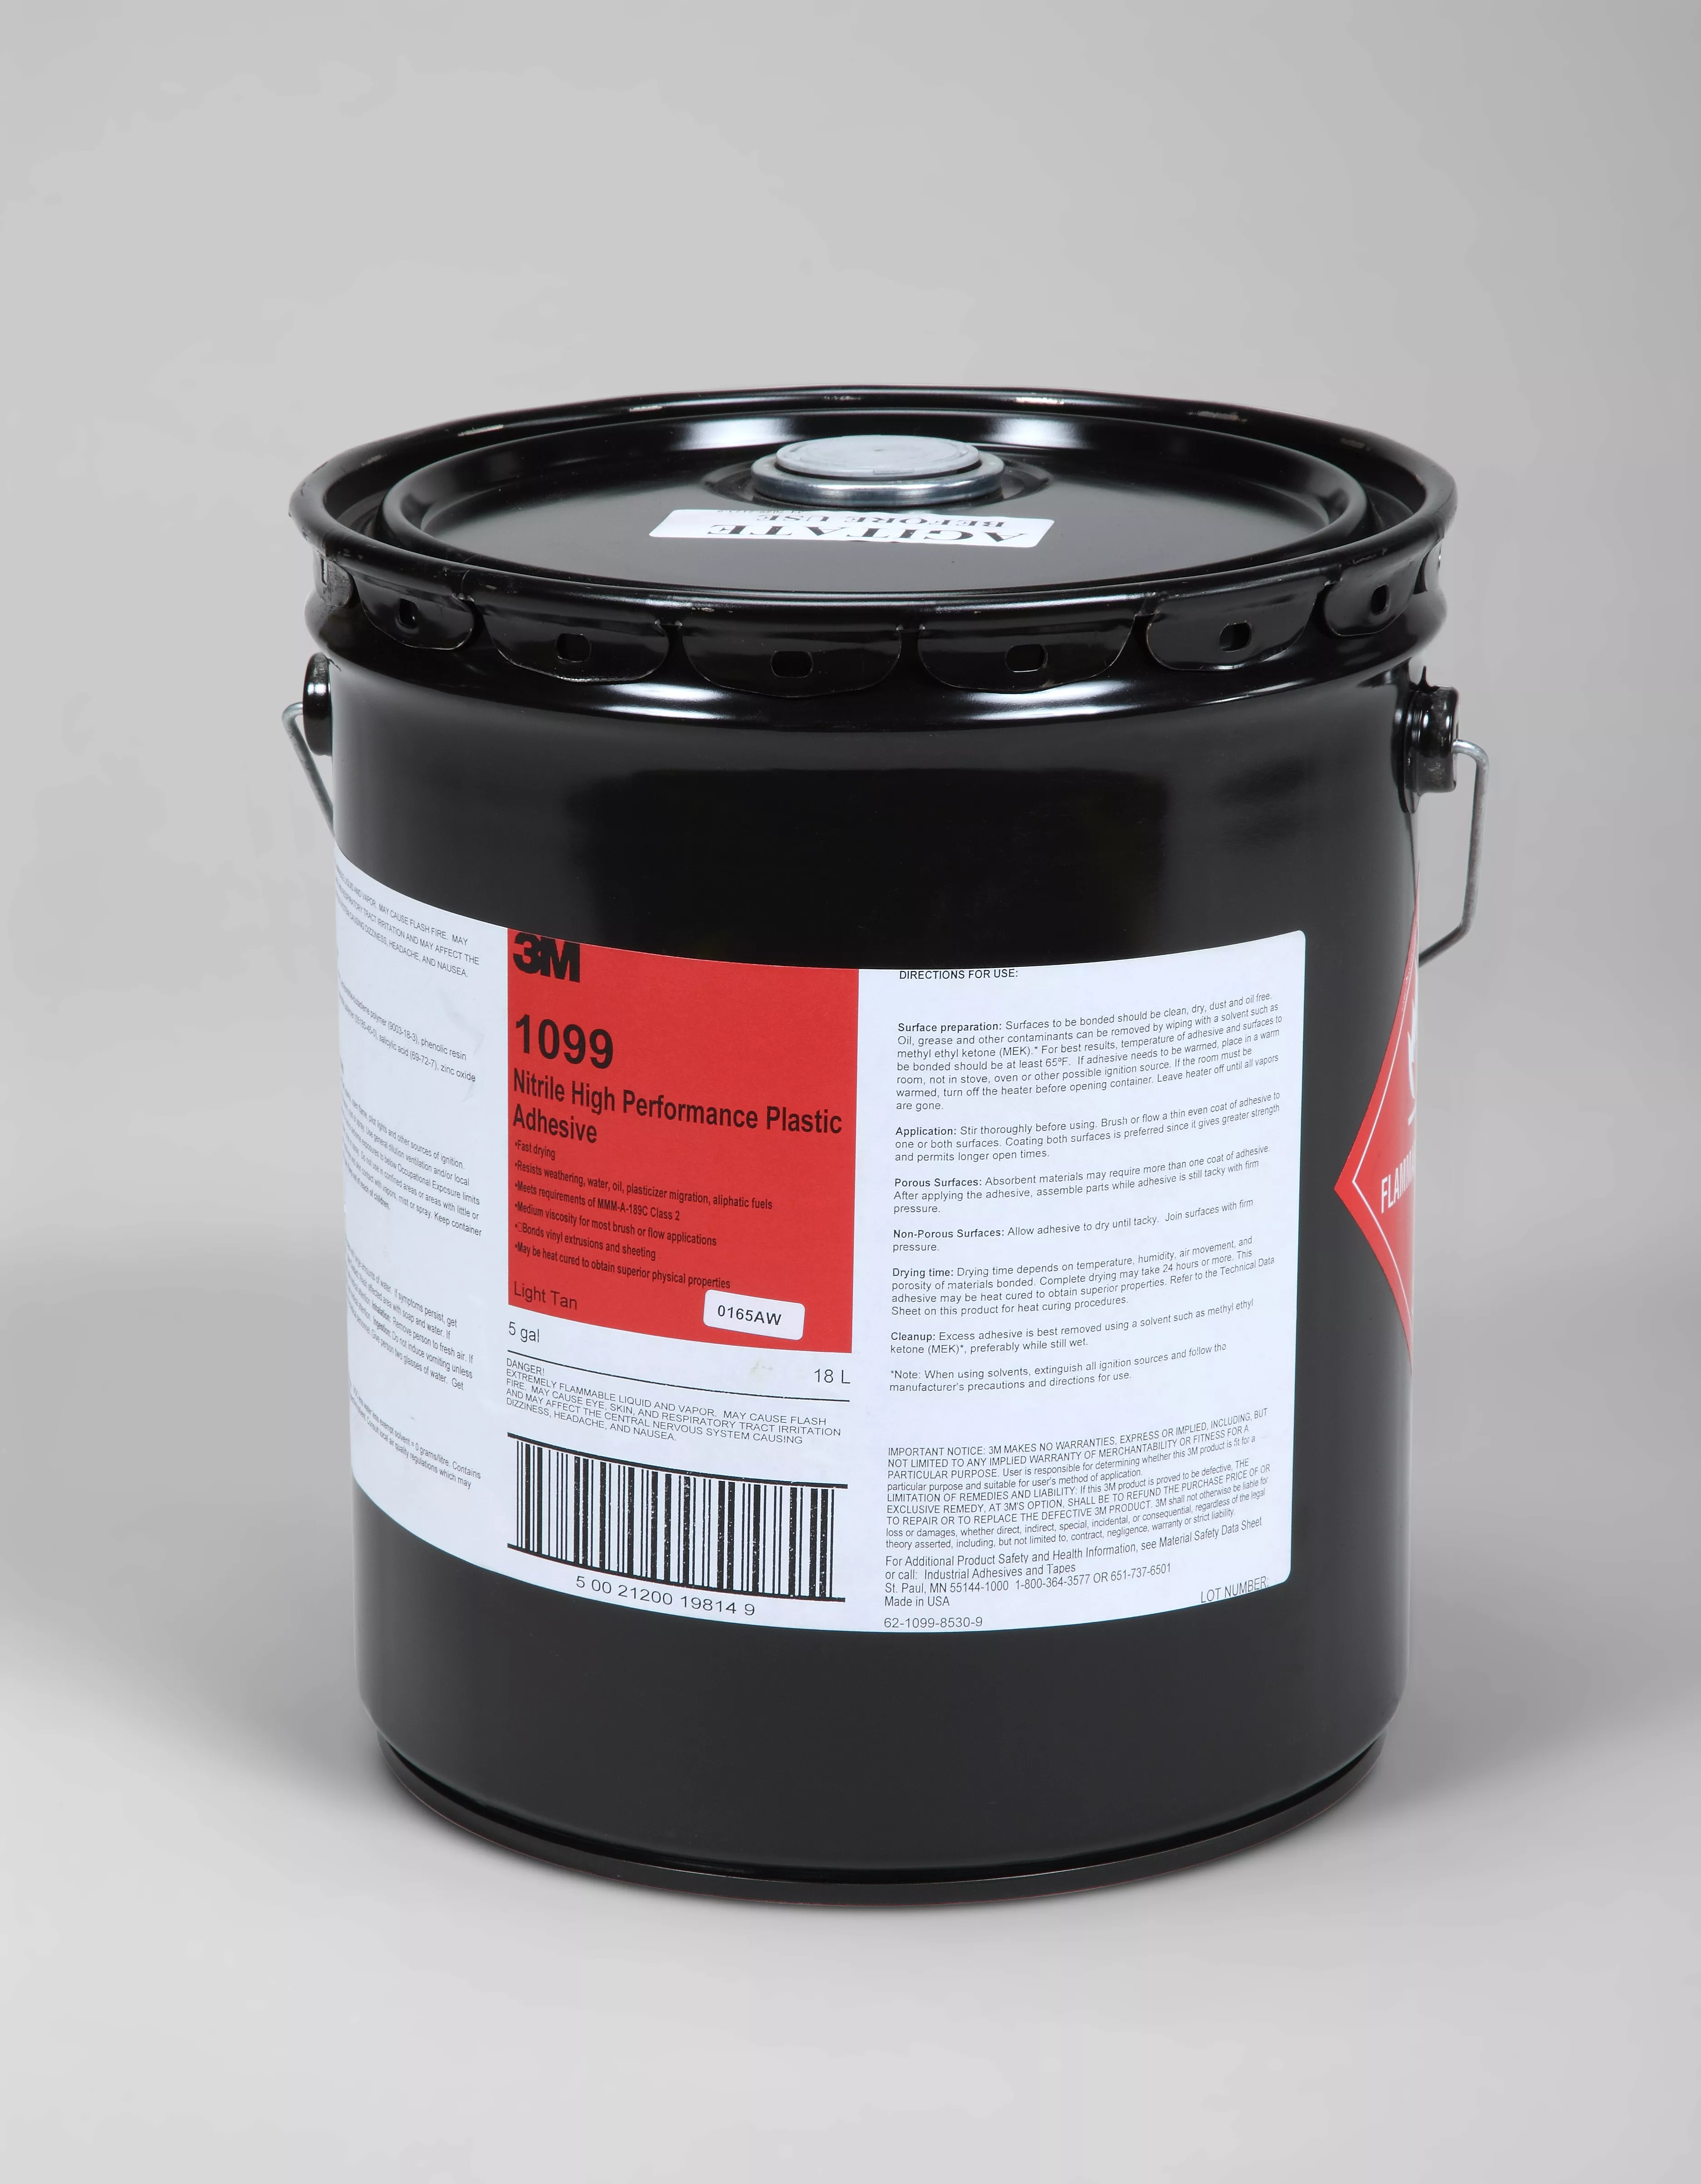 3M™ Nitrile High Performance Plastic Adhesive 1099, Tan, 5 Gallon
(Pail), 1 Can/Drum